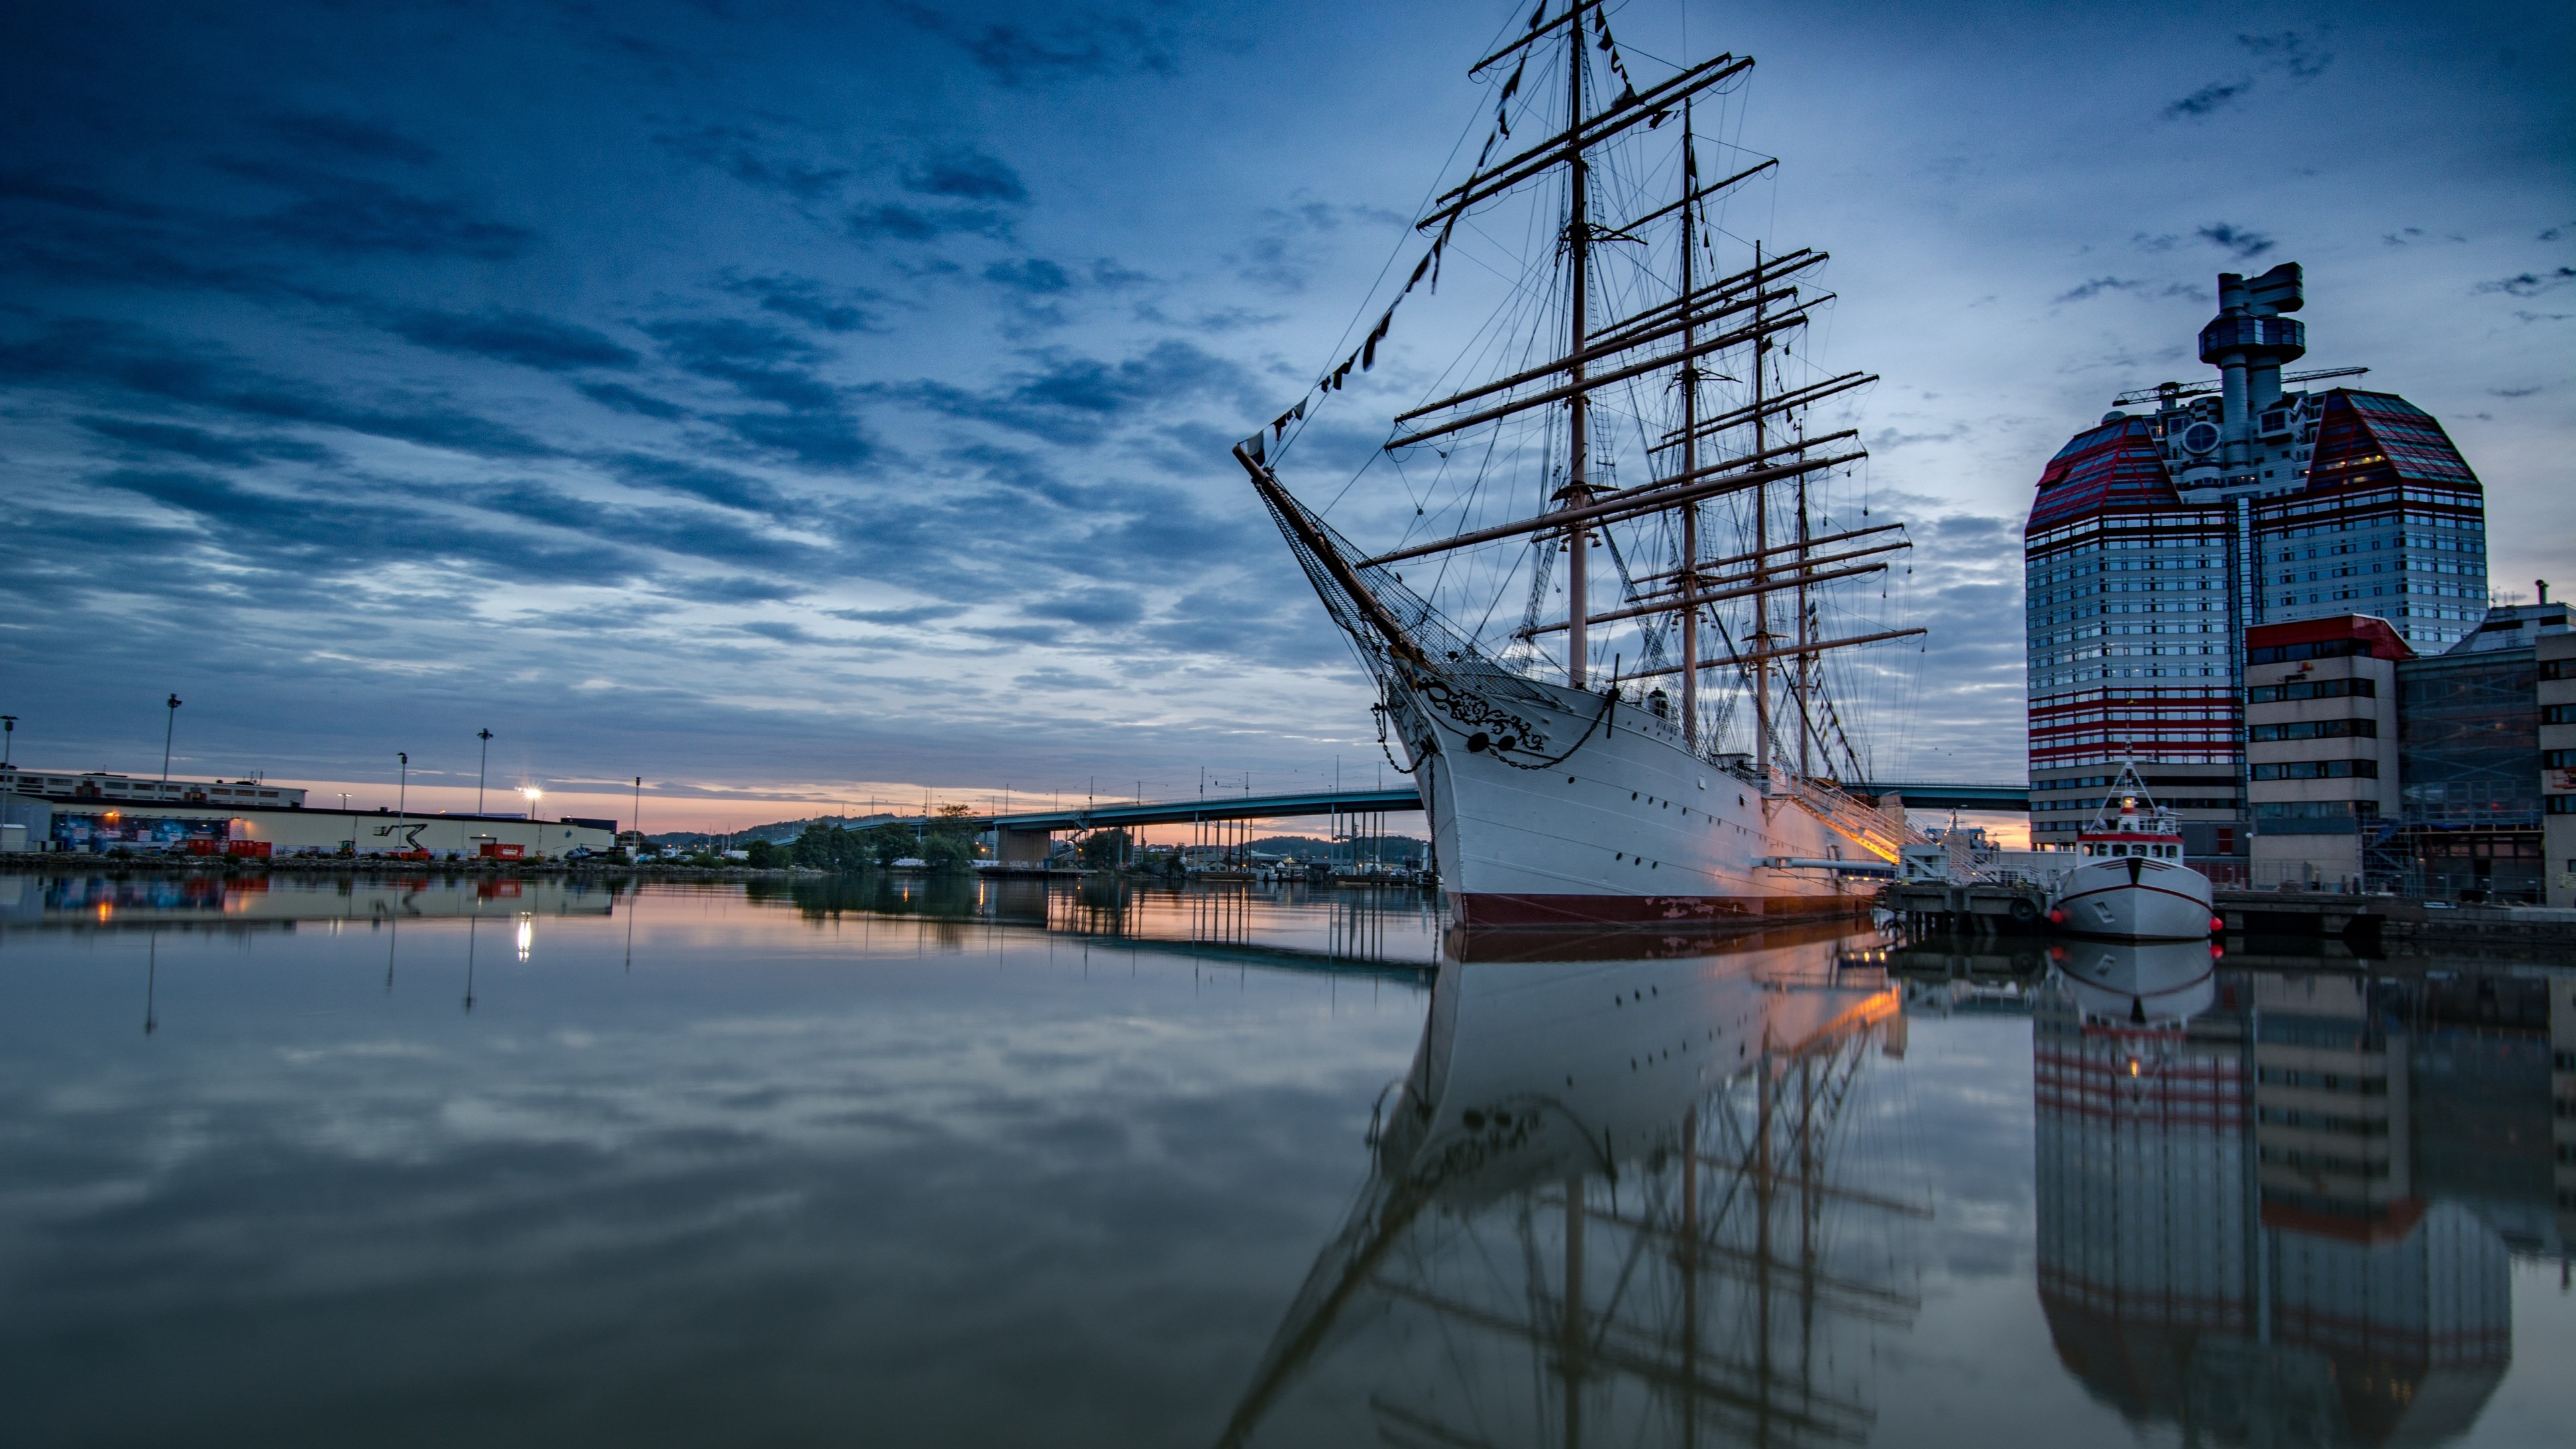 Download wallpaper: Historic wooden sailing ship in Gothenburg